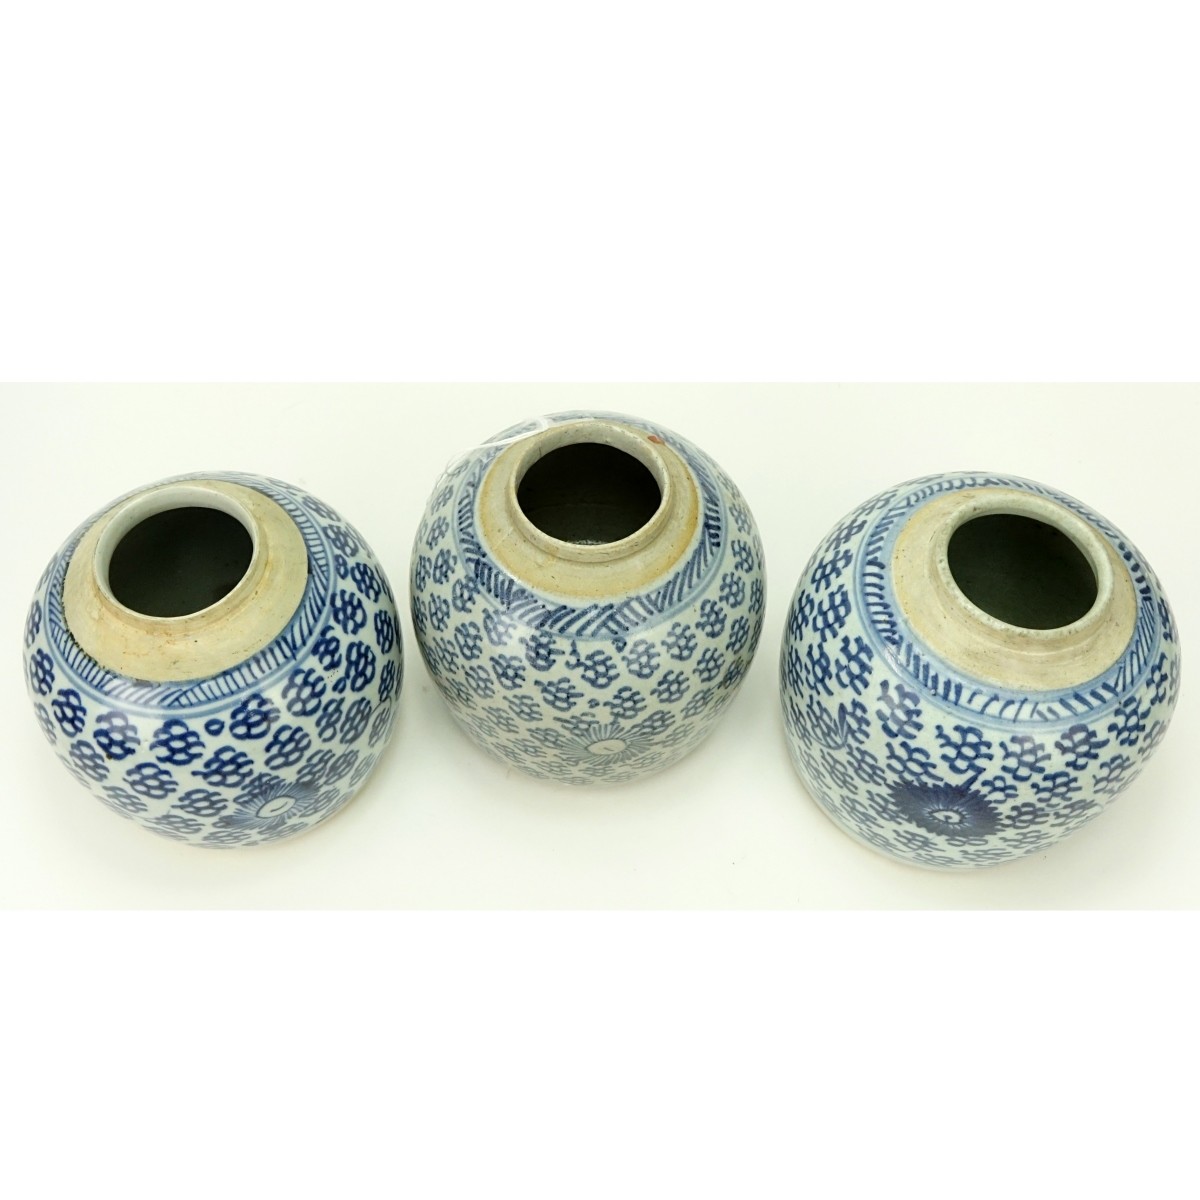 3 Antique Chinese Blue & White Porcelain Jars